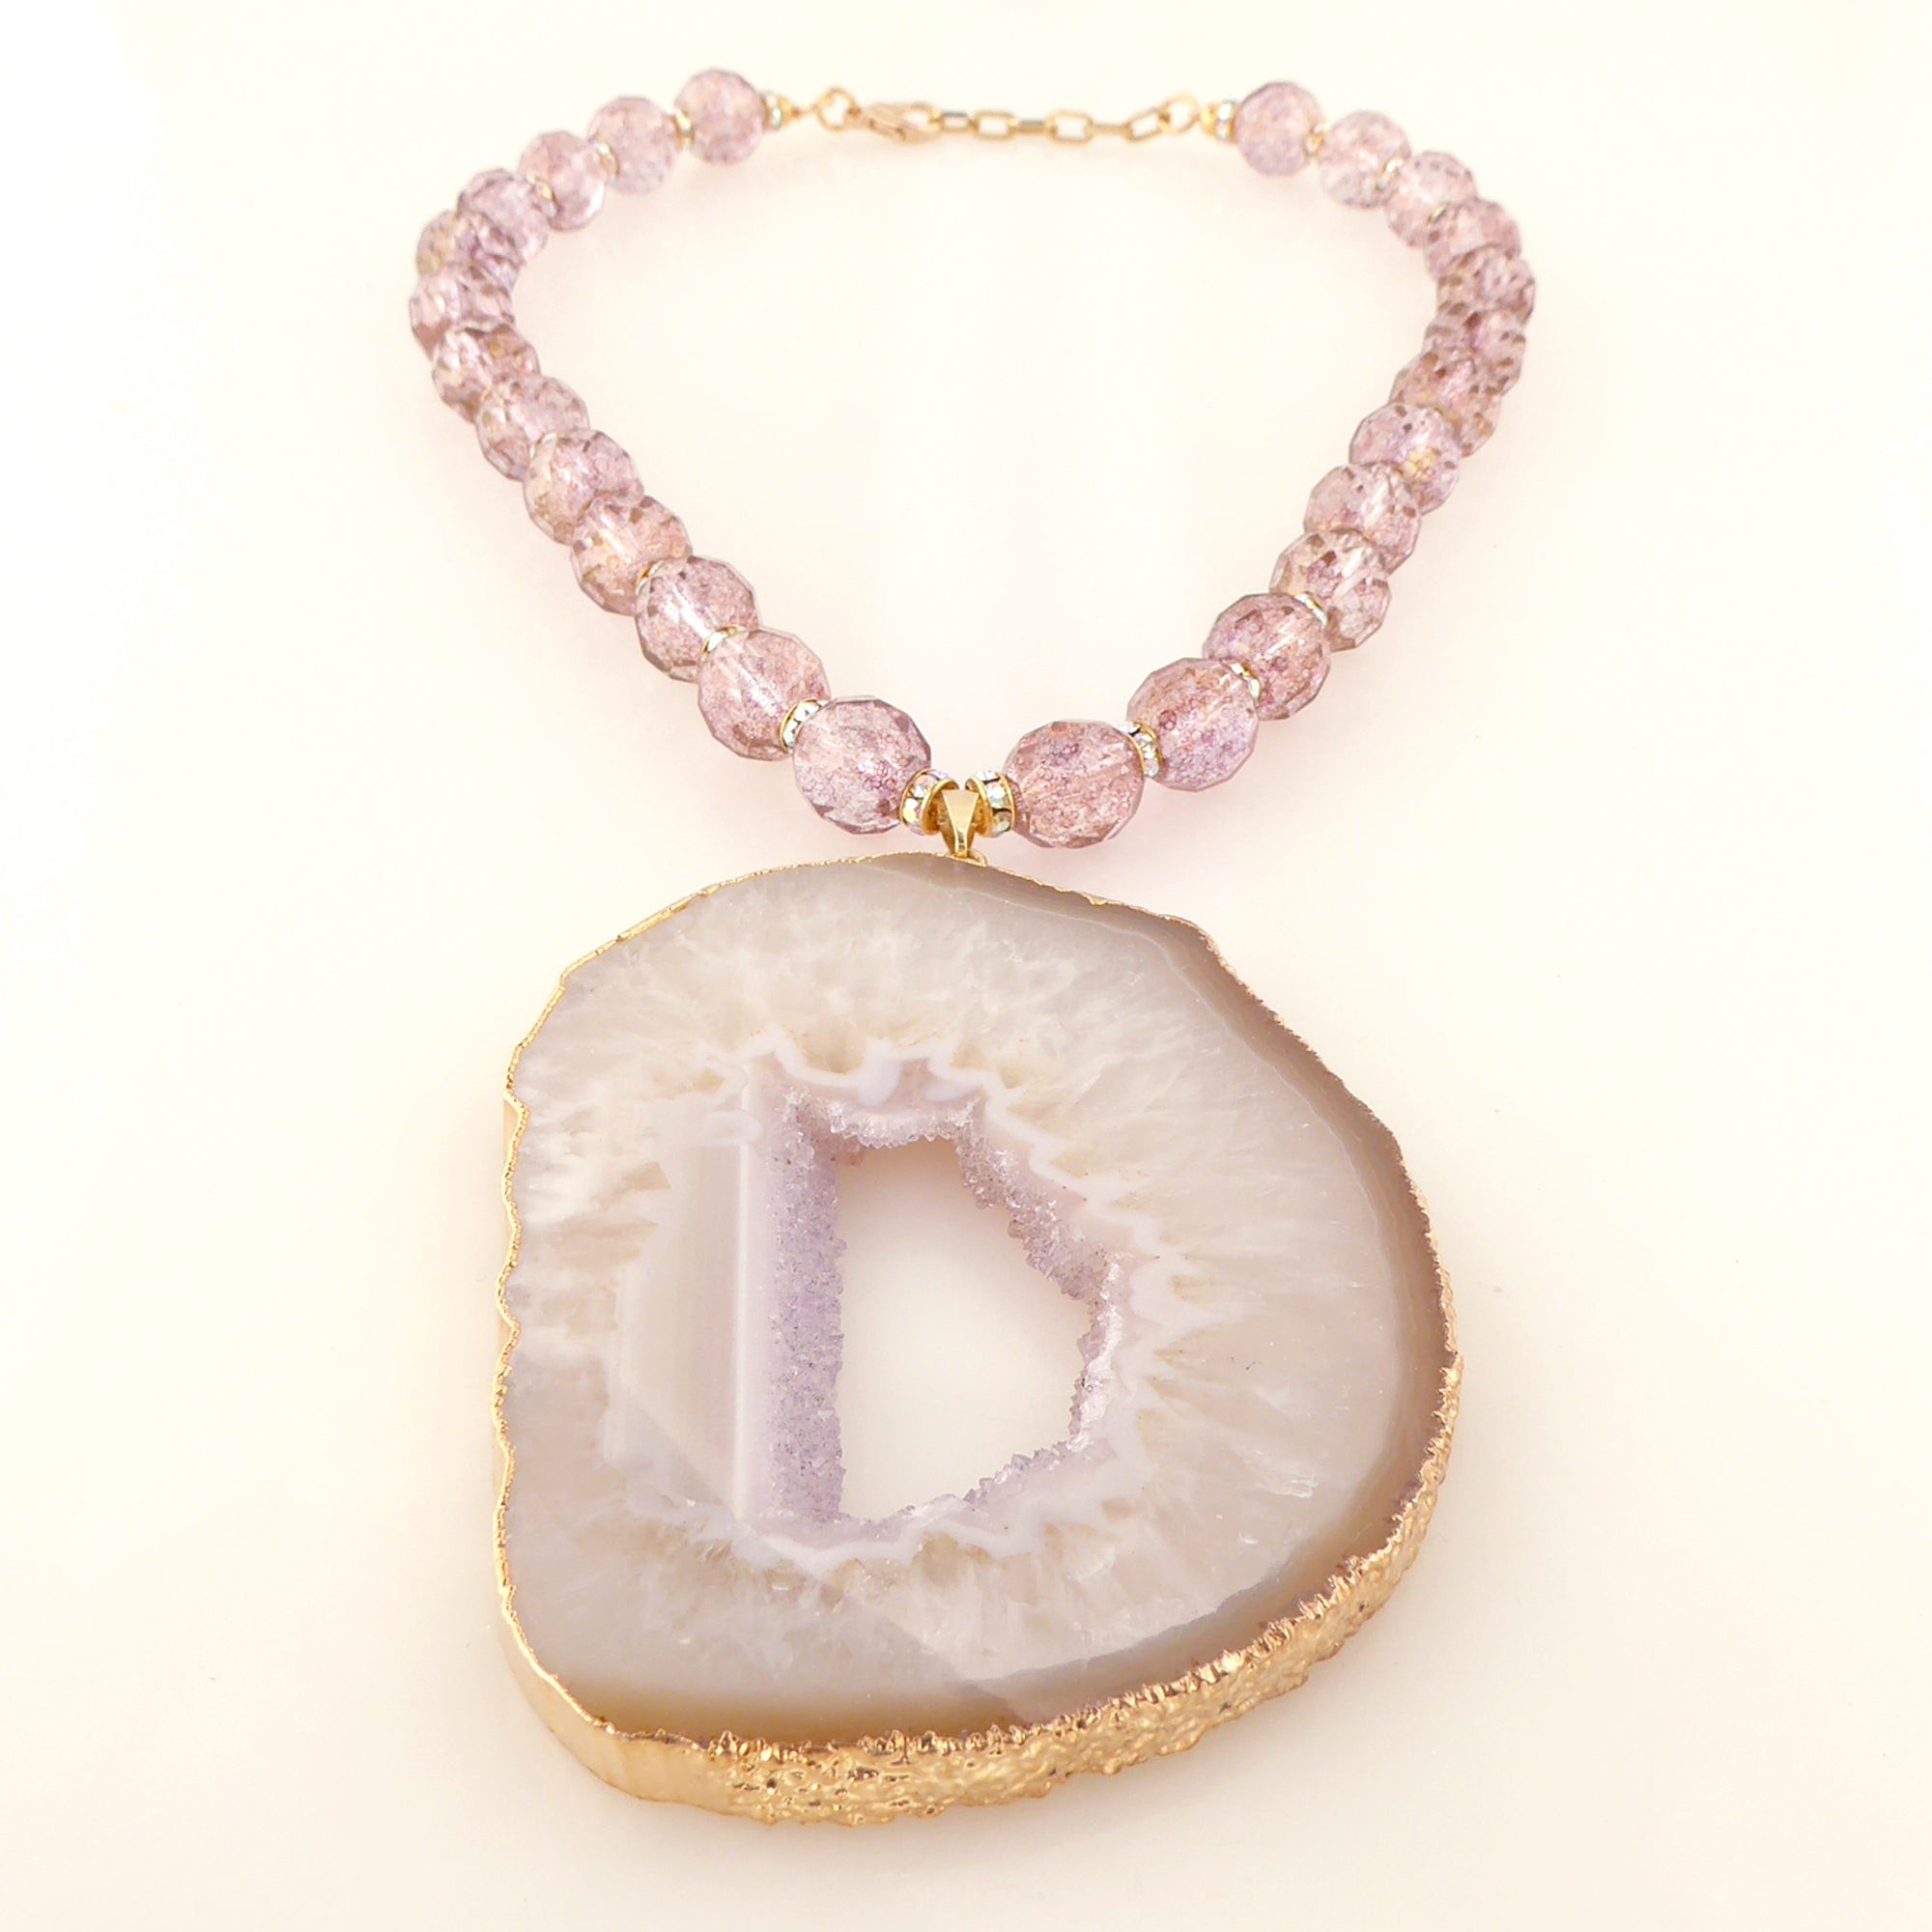 Lavender druzy agate necklace by Jenny Dayco 3